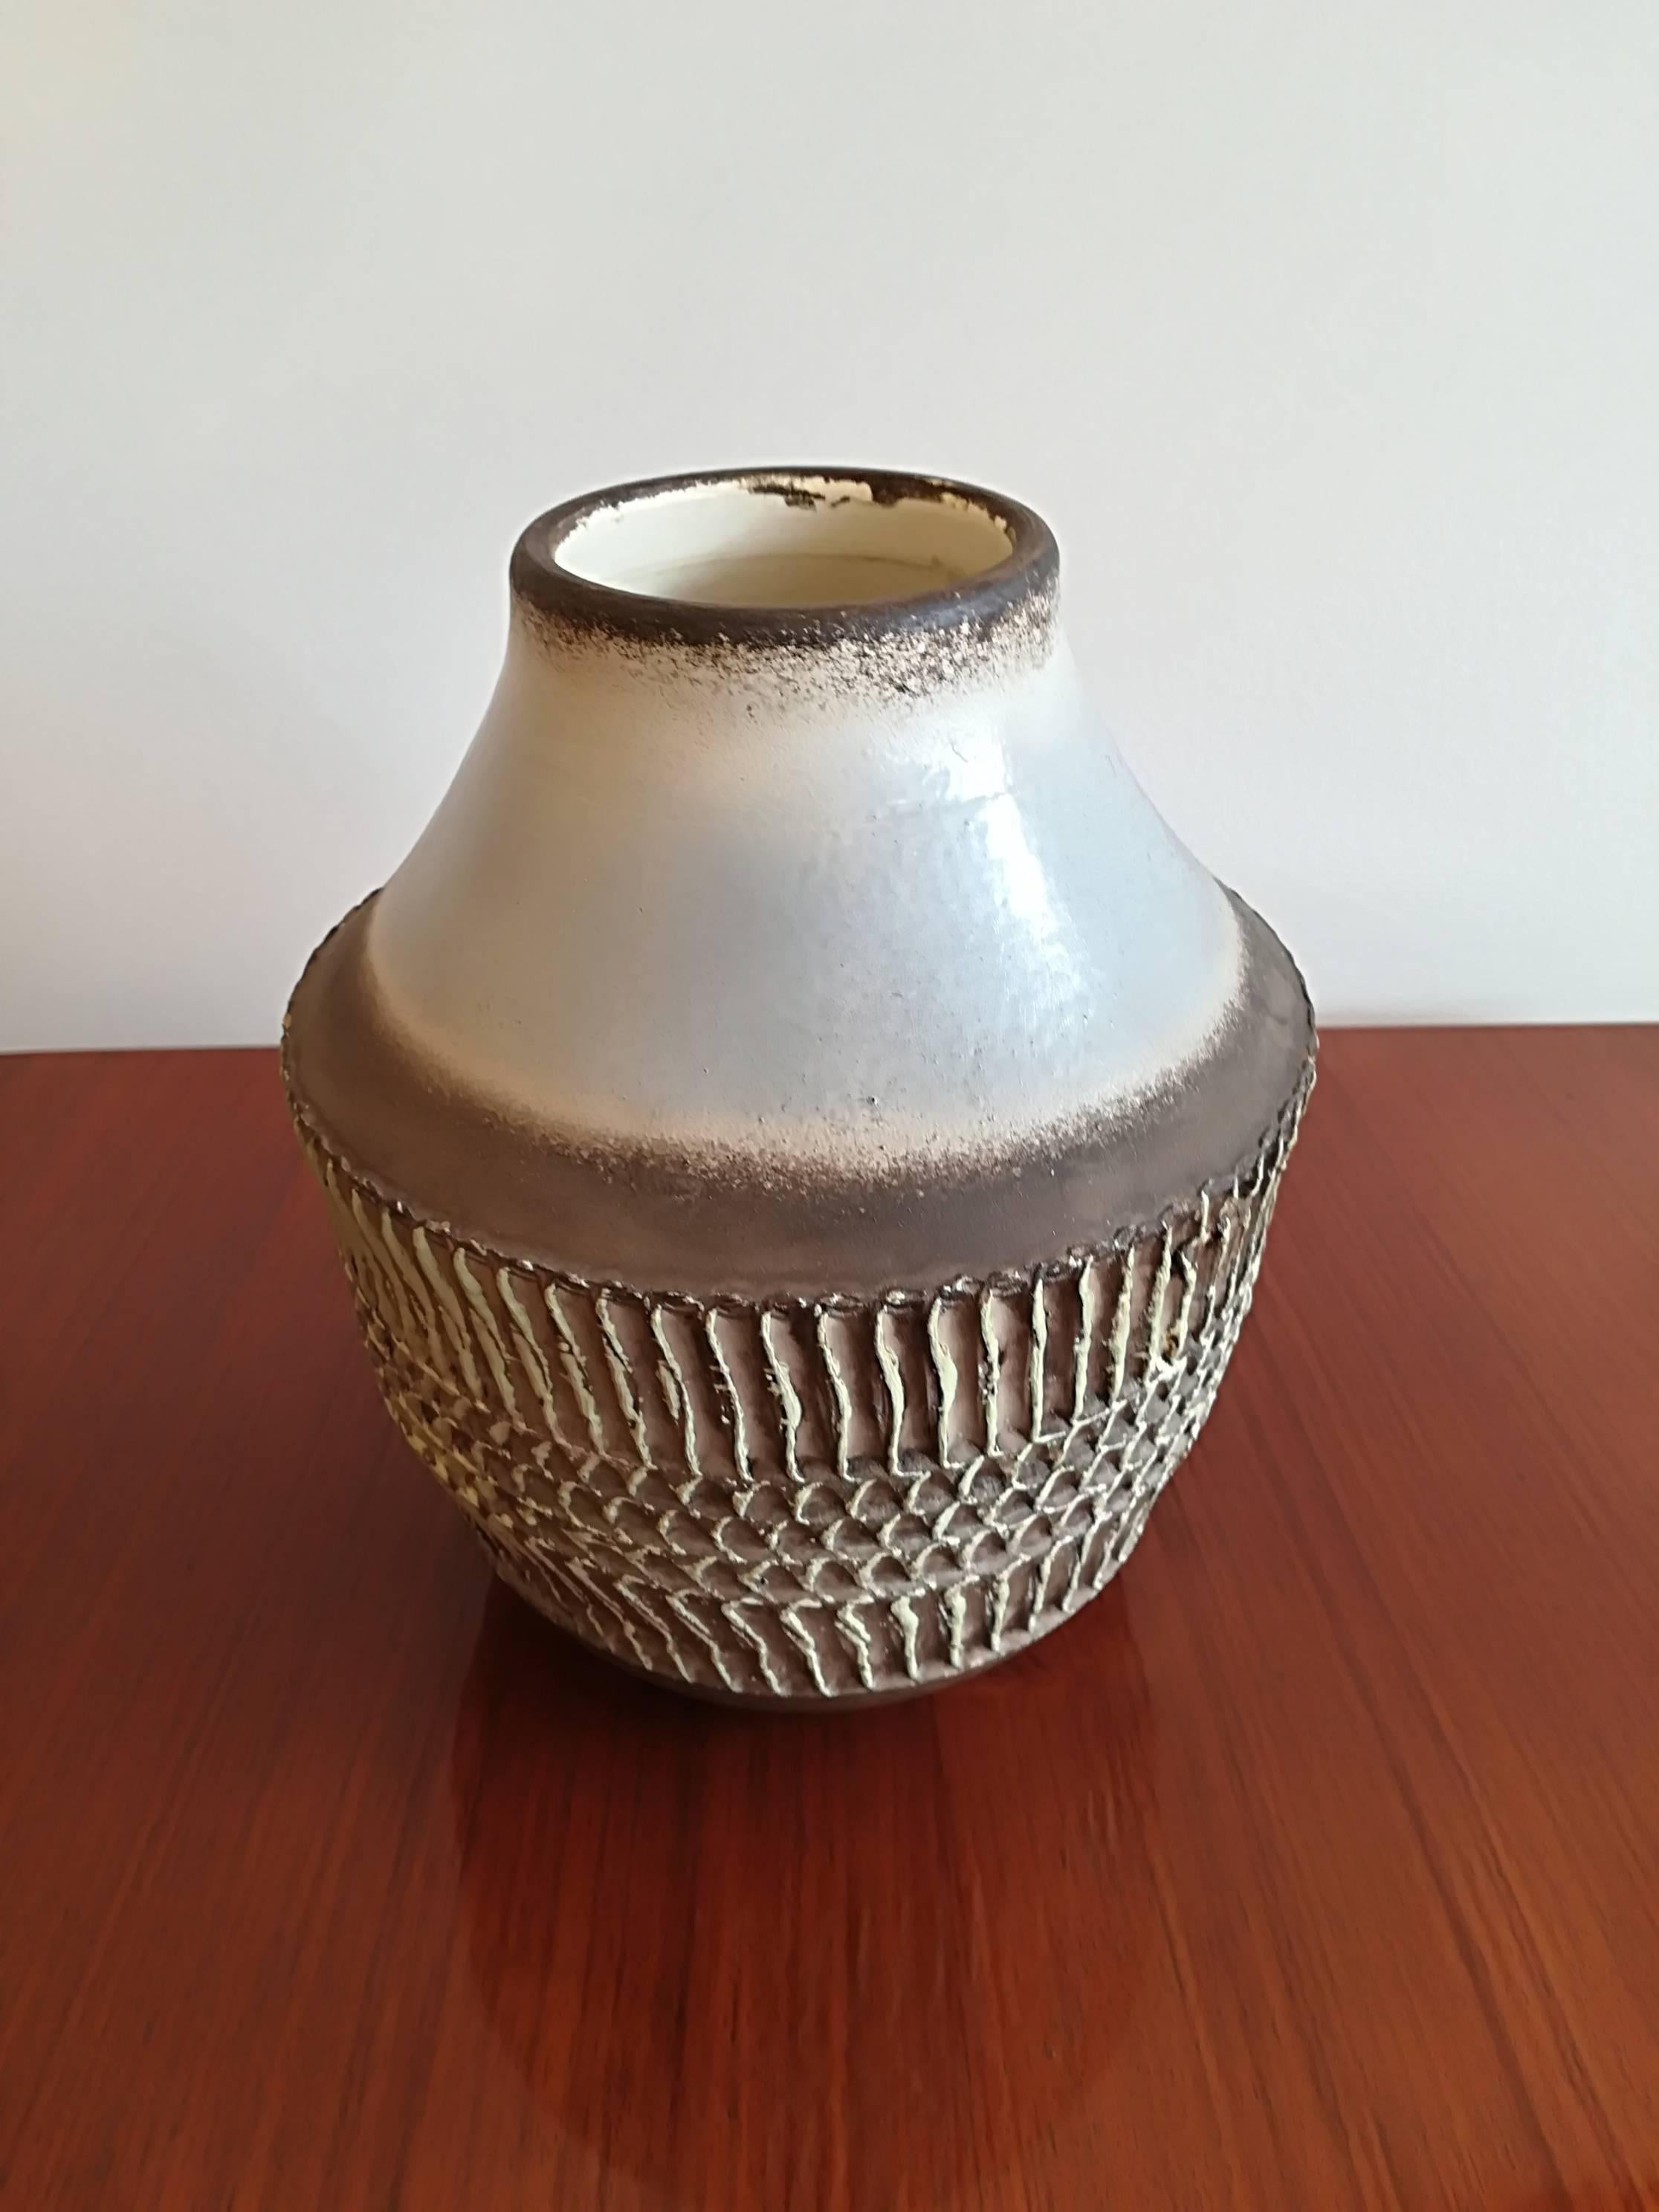 Jean Besnard Art Deco ceramic vase, circa 1930, signed, in excellent condition.